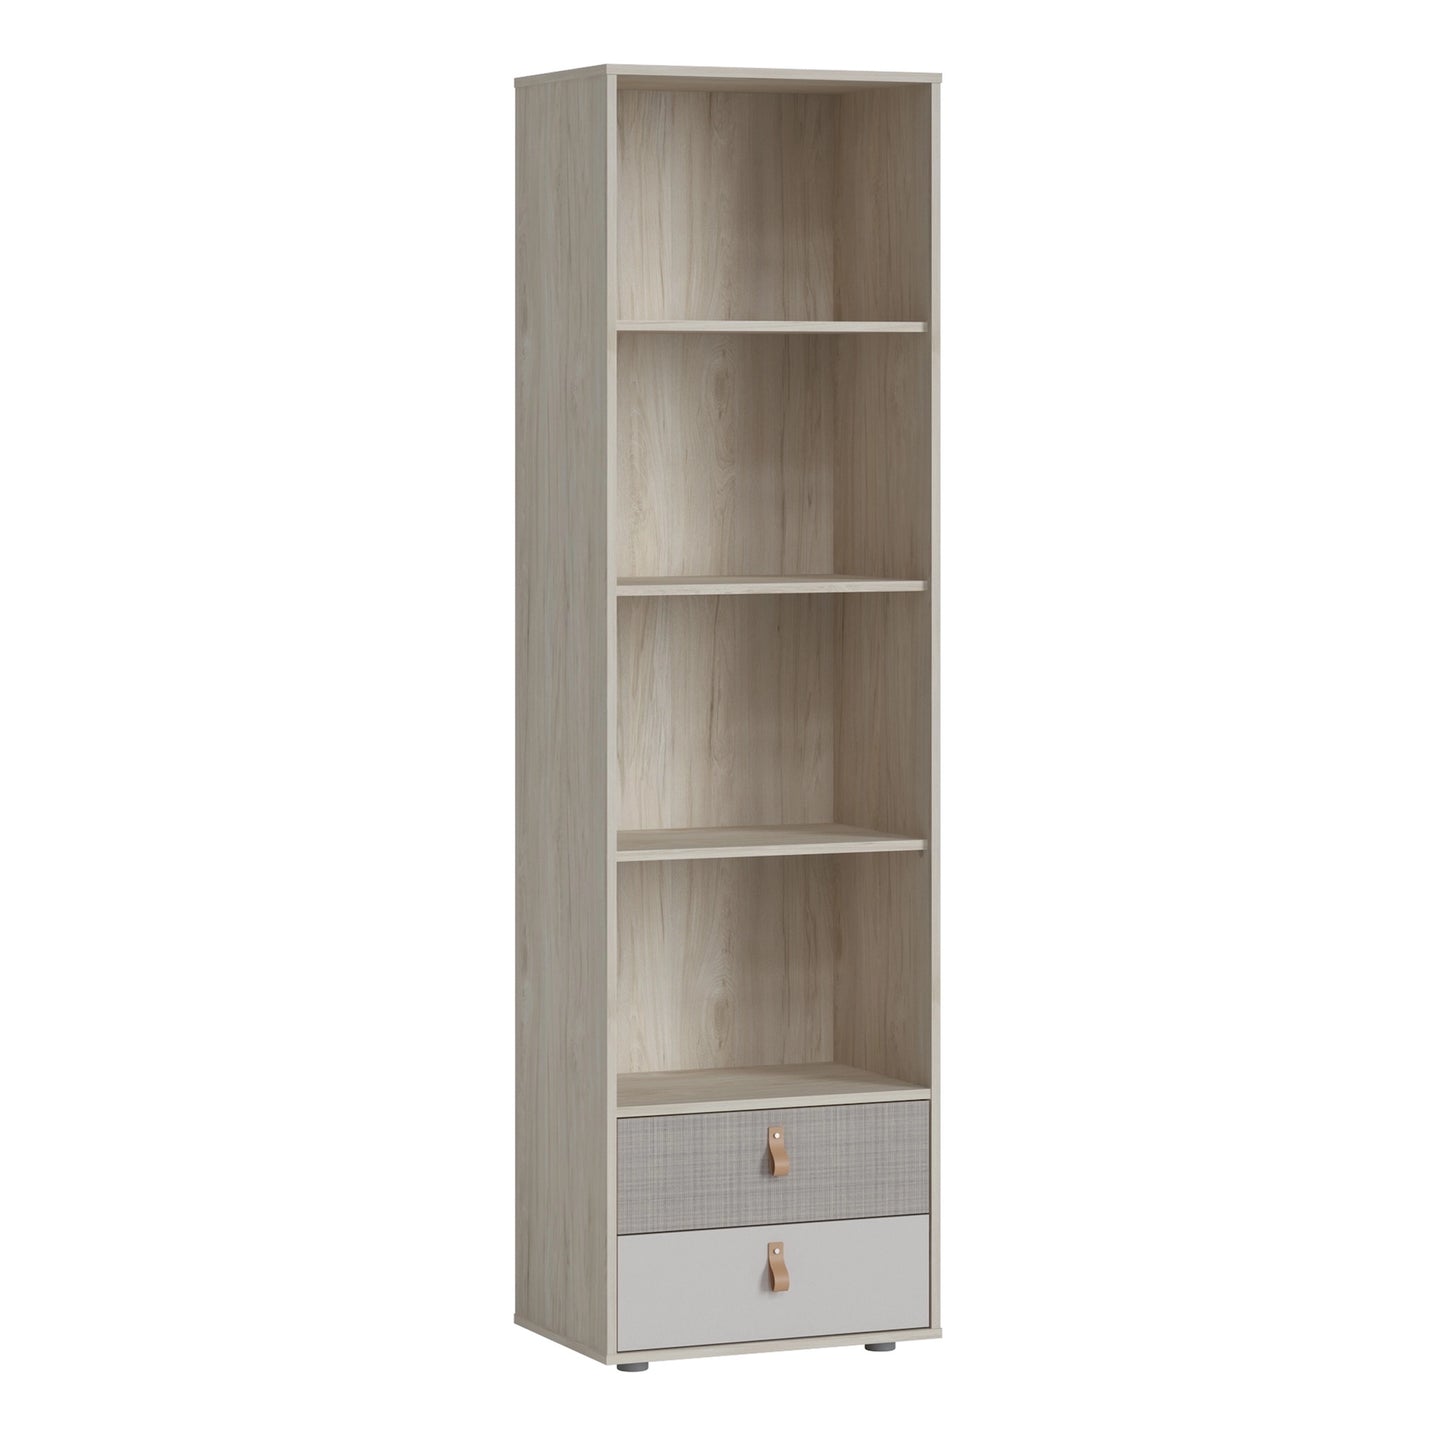 Furniture To Go Denim 2 Drawer Bookcase in Light Walnut, Grey Fabric Effect & Cashmere